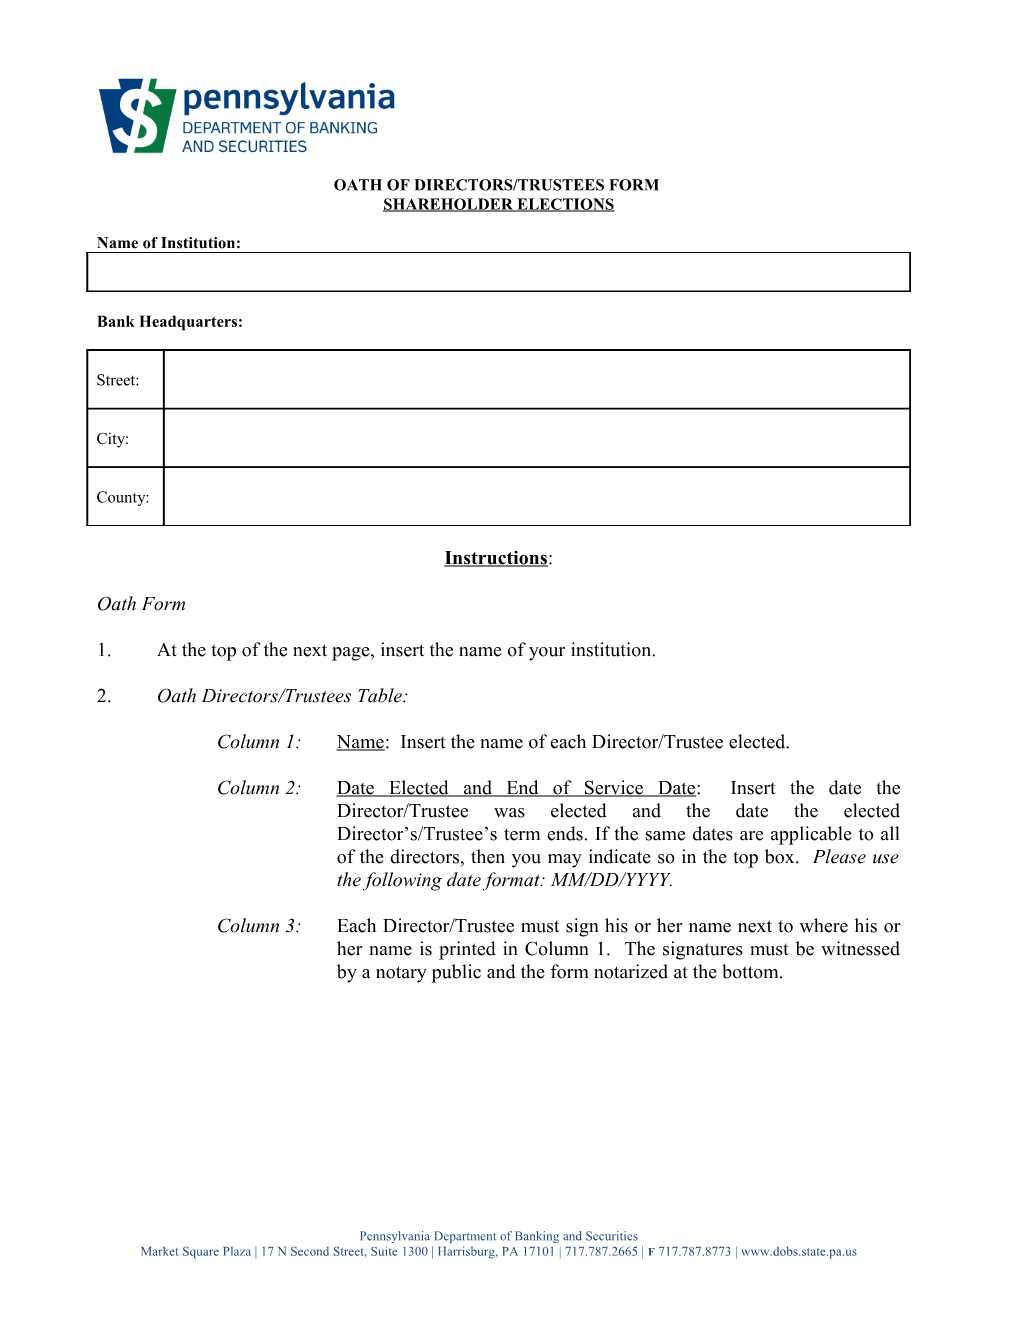 Oath of Directors/Trustees Form